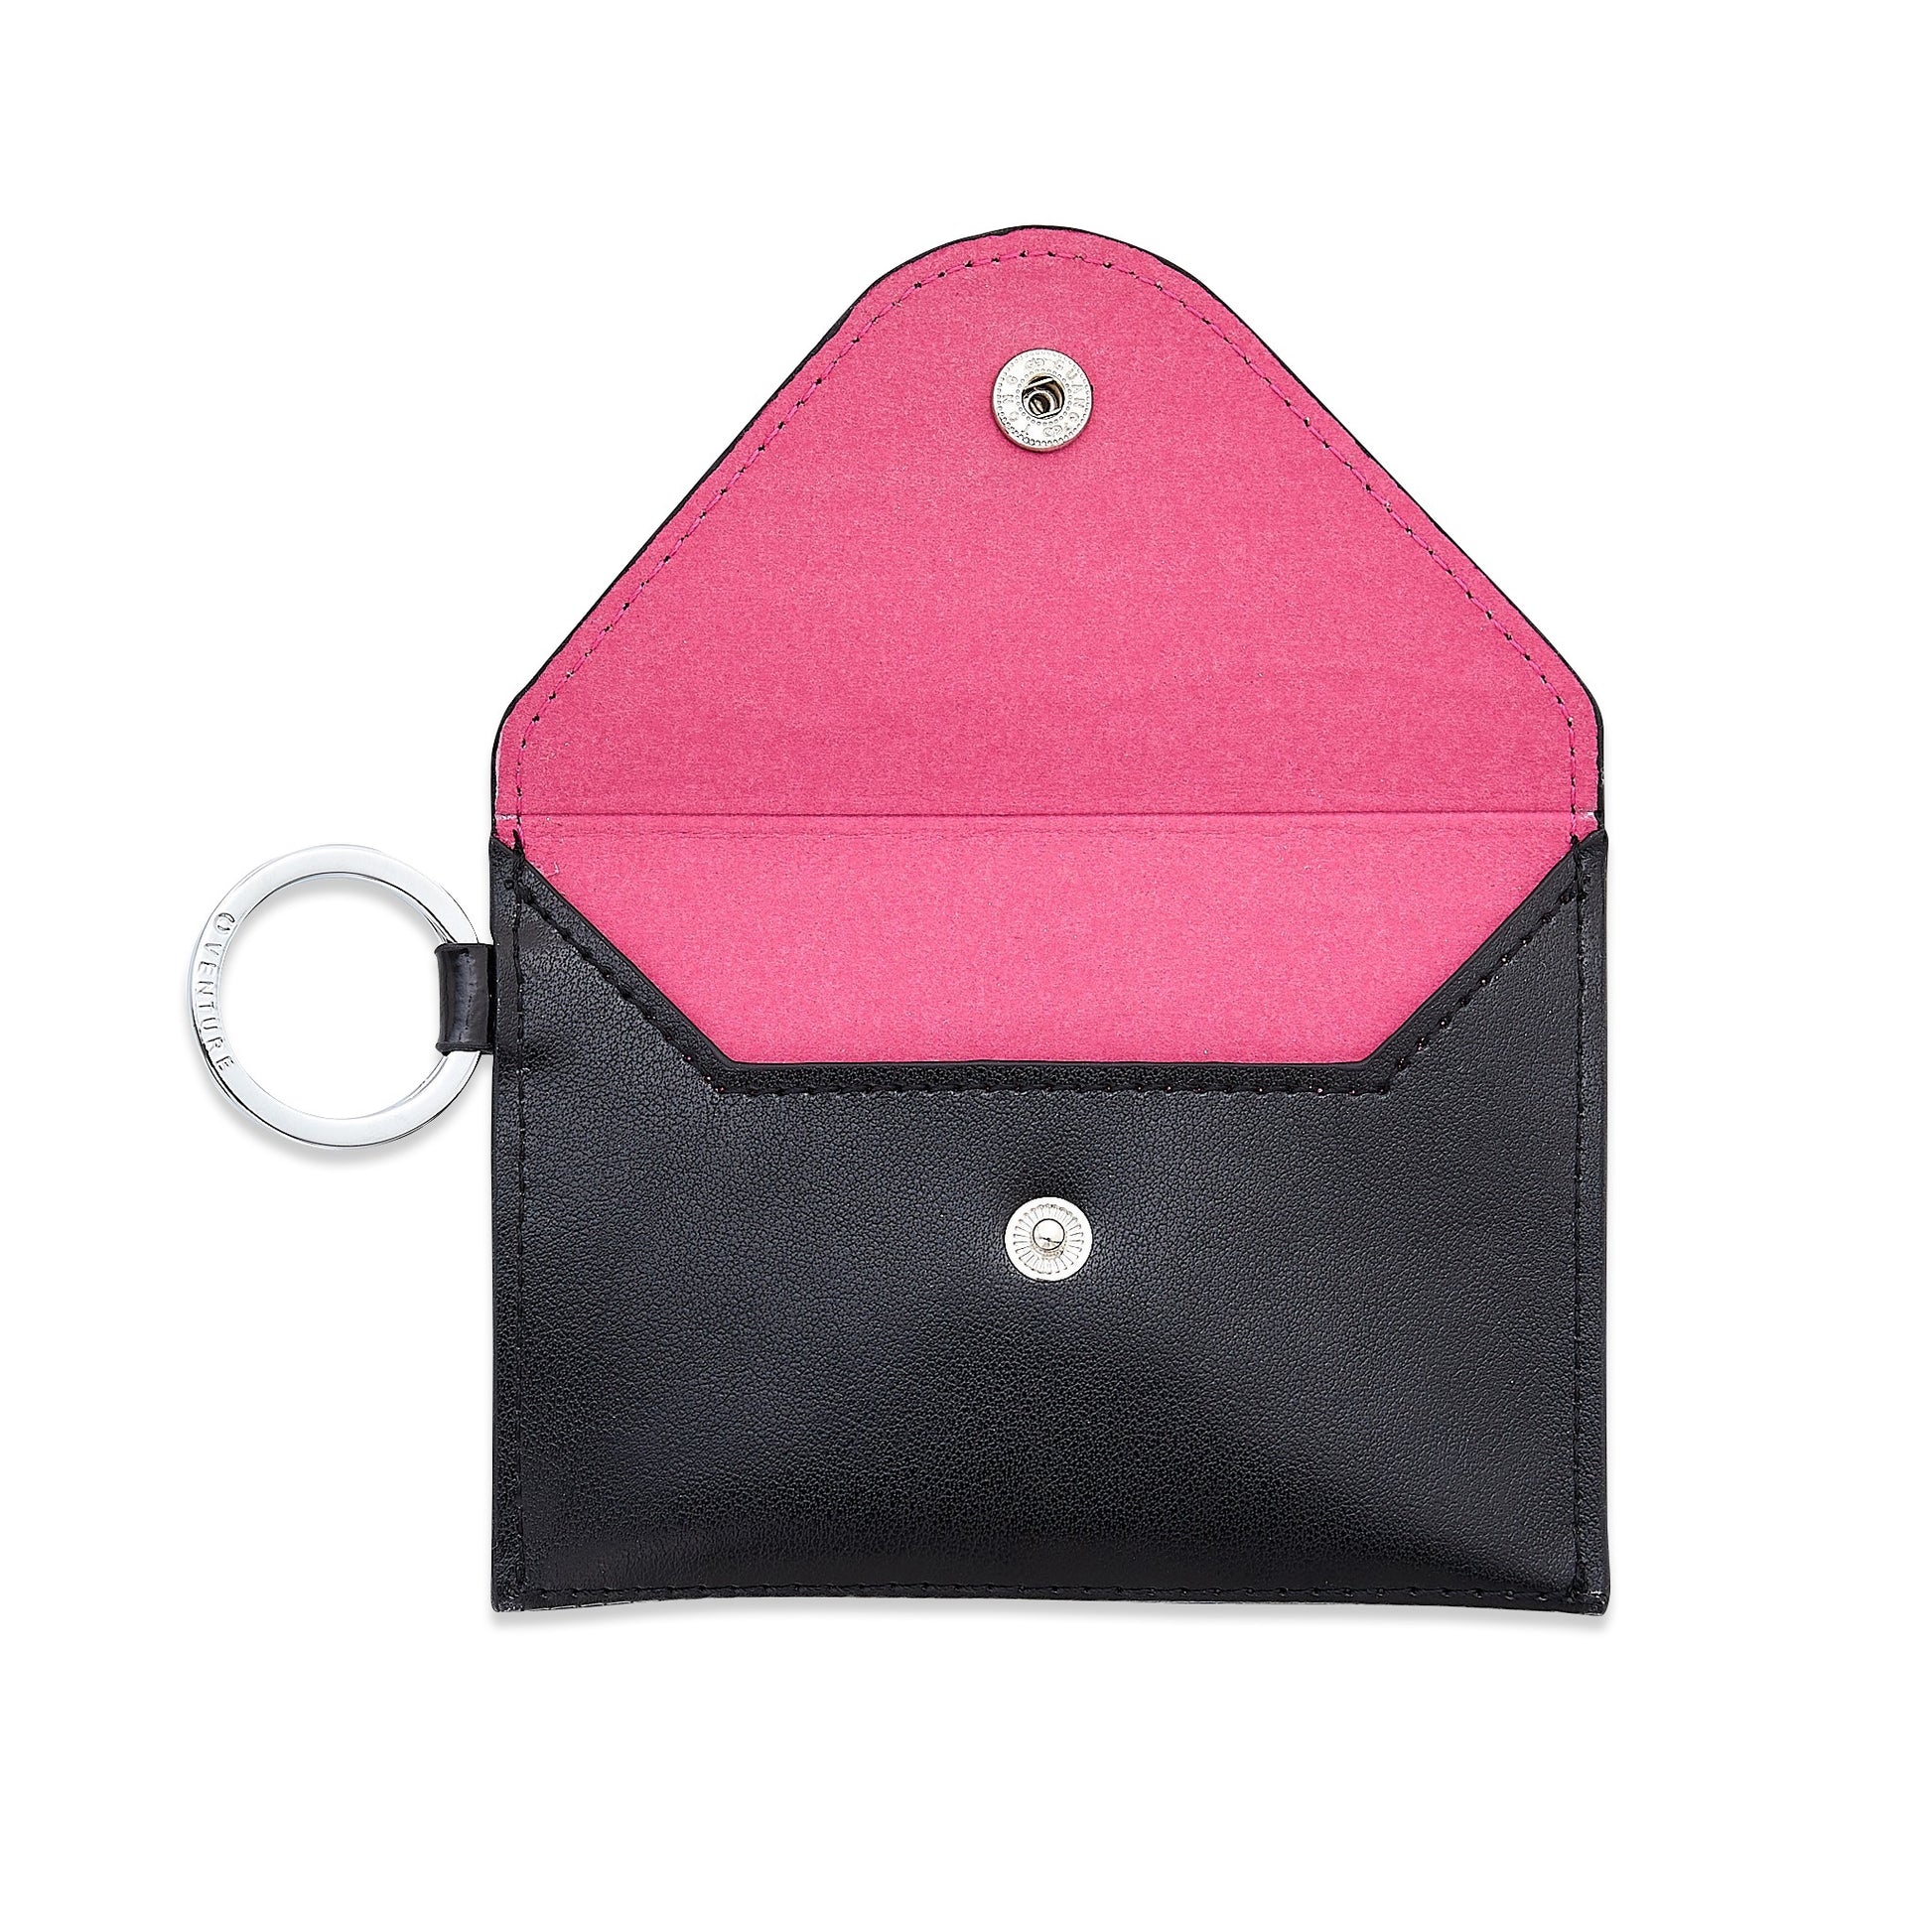 Back in Black Croc-Embossed - Mini Envelope Wallet - Oventure with hot pink microfiber liner